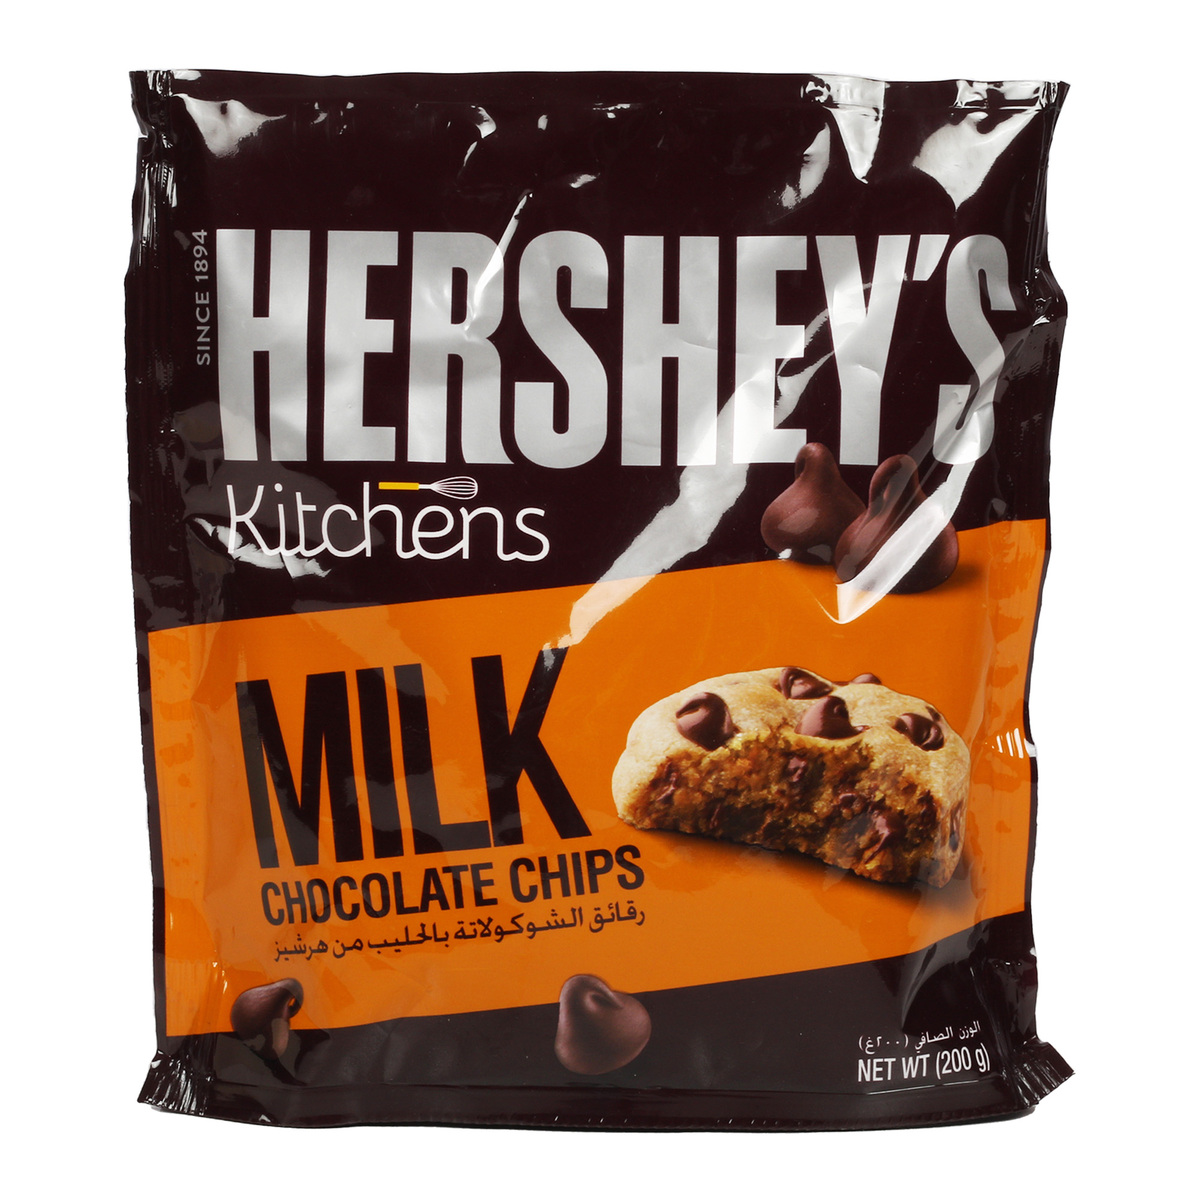 Hershey's Kitchens Milk Chocolate Chips Value Pack 200 g